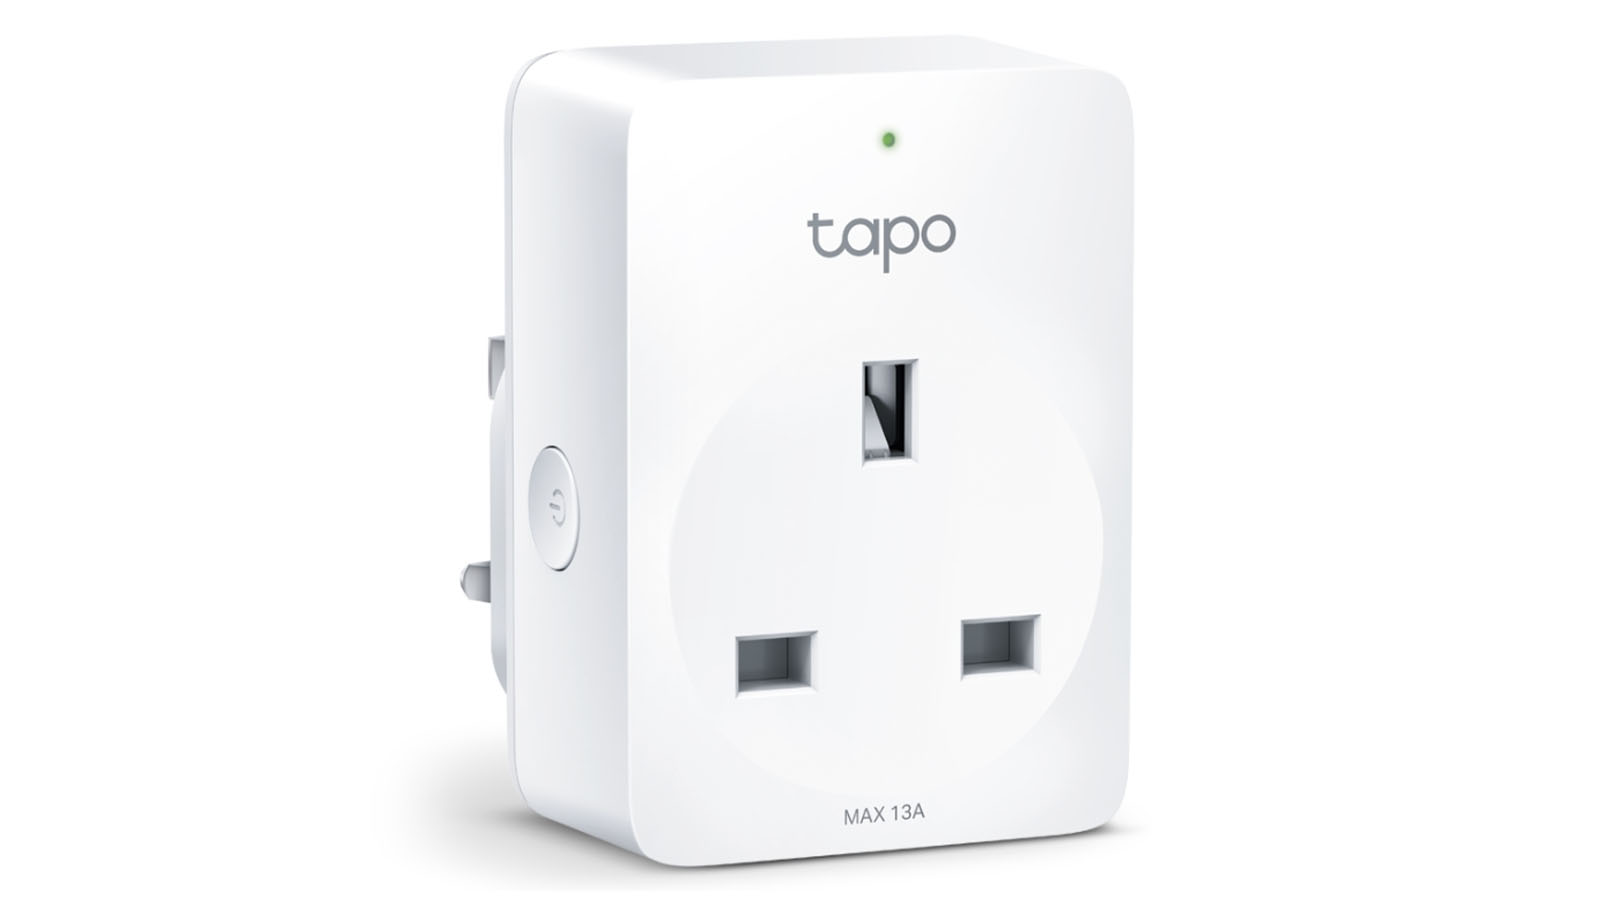 Tapo P100 Mini Smart Wi-Fi Socket - Good all-rounder